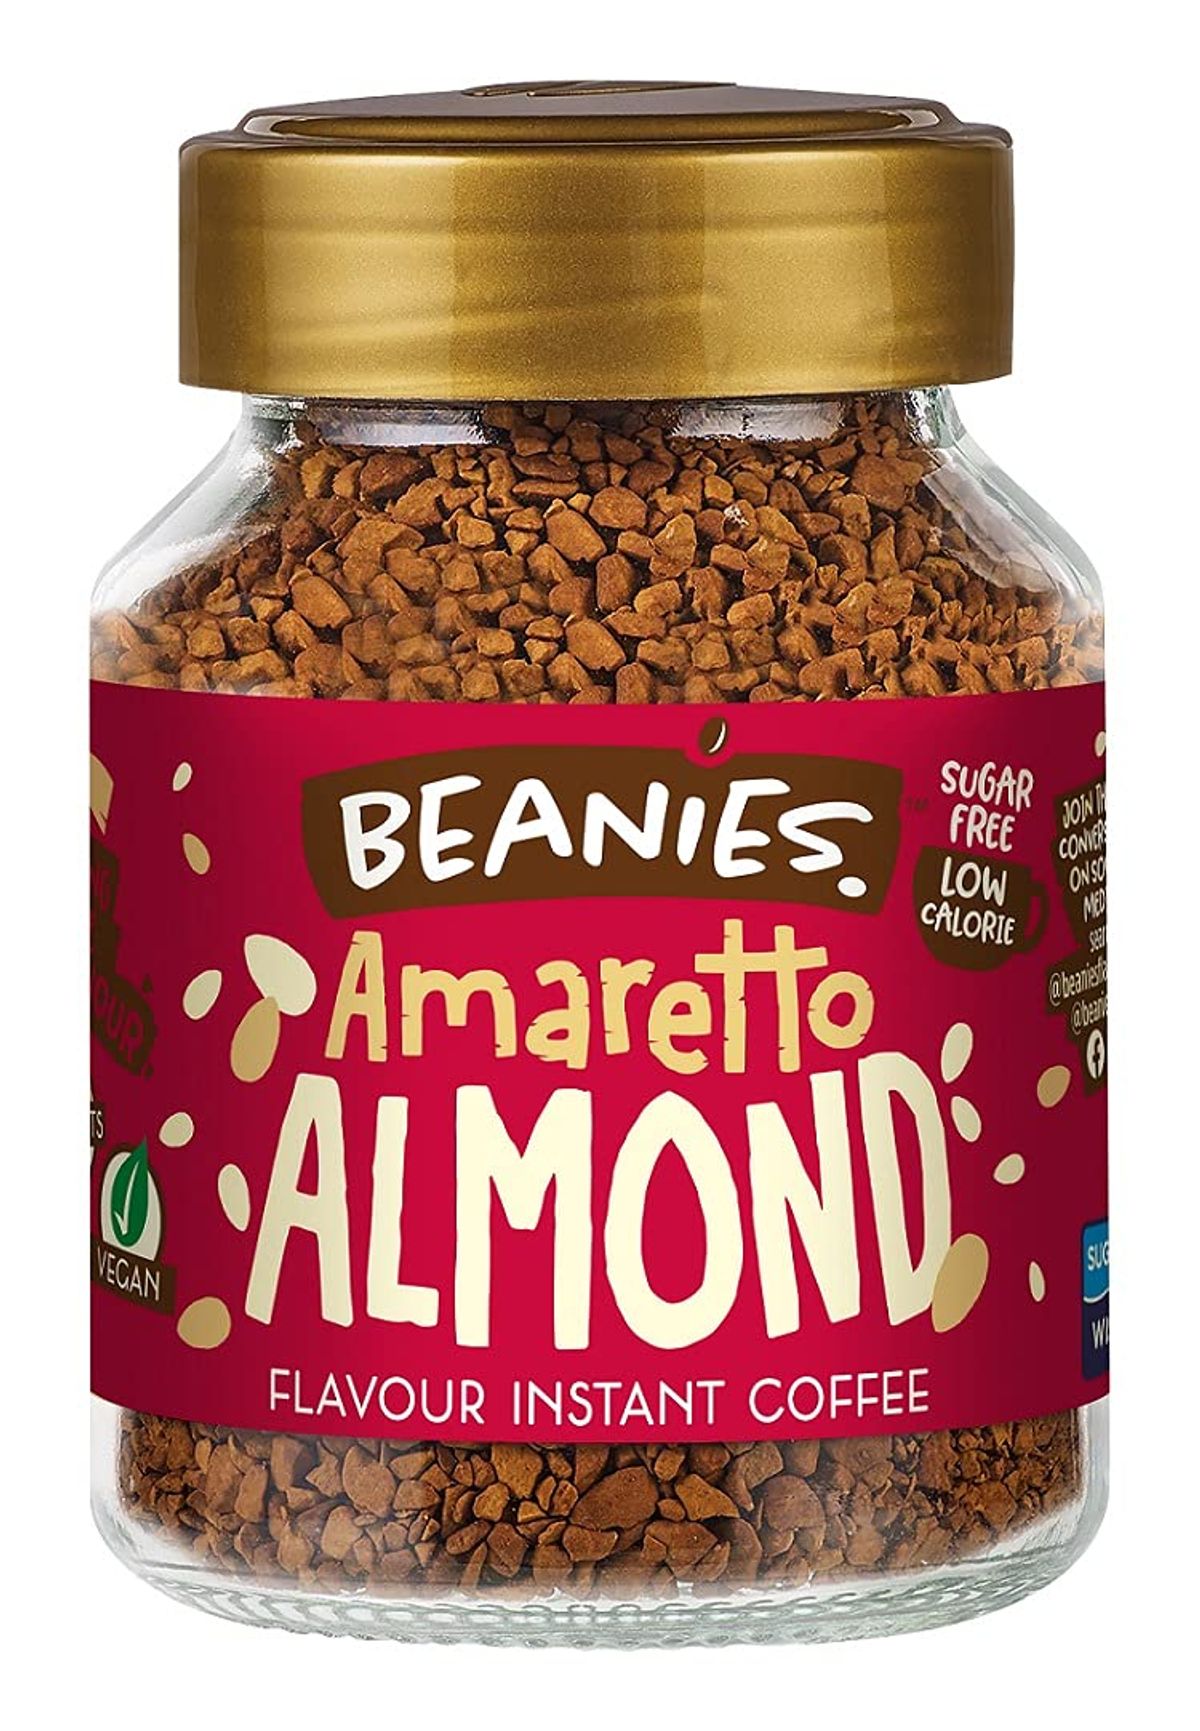 Beanies Amaretto Almond Instant Coffee Image